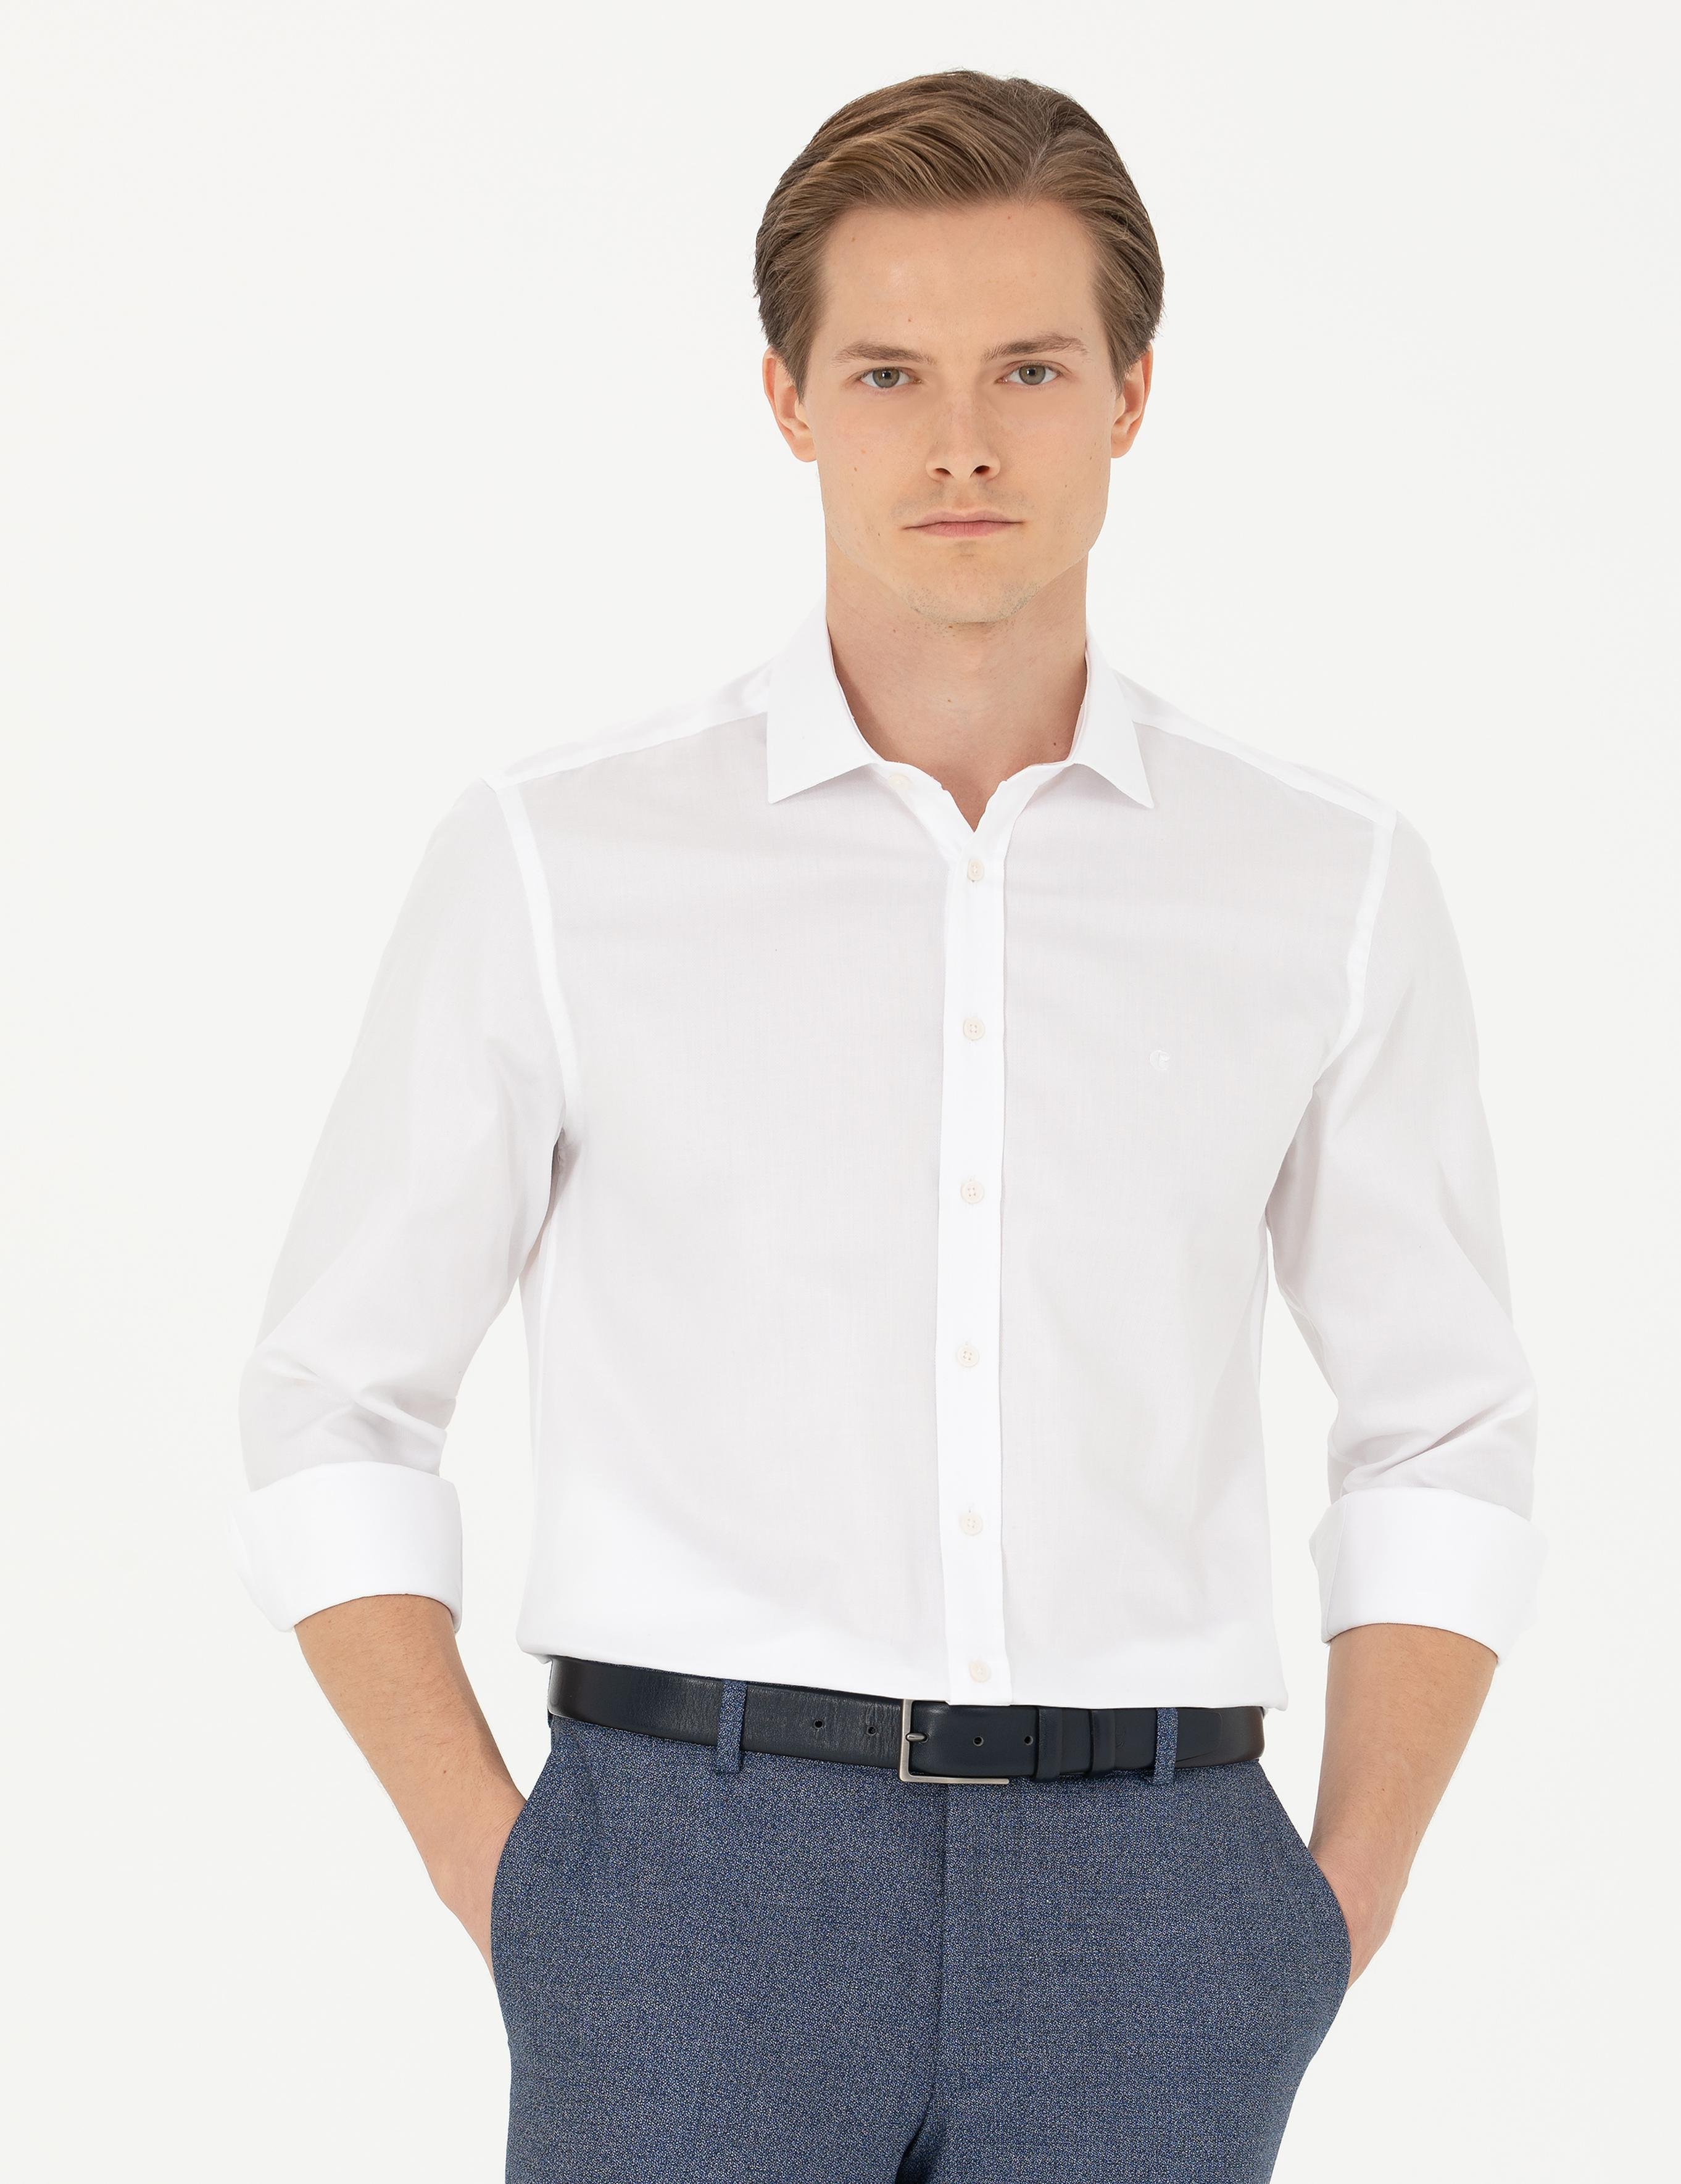 Beyaz Slim Fit Basic Gömlek - 50270138009